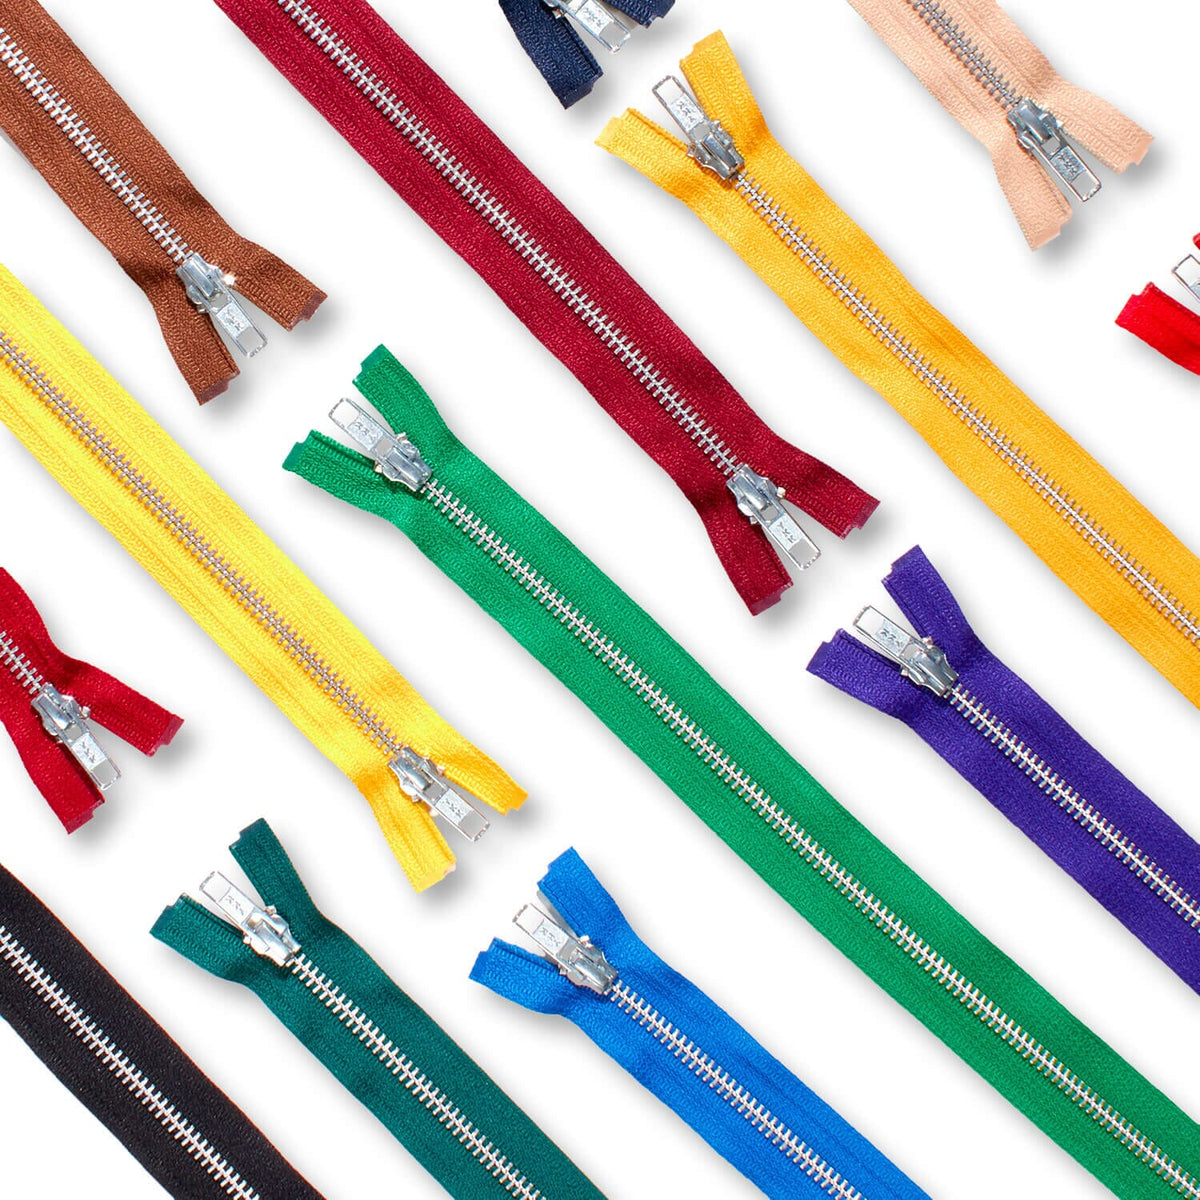 YKK Metal Zipper Repair Kit For all YKK Metal Zippers, Brass, Nickel &  Aluminum, Jeans, Jackets, Heavy Duty Zippers -100% Made in USA